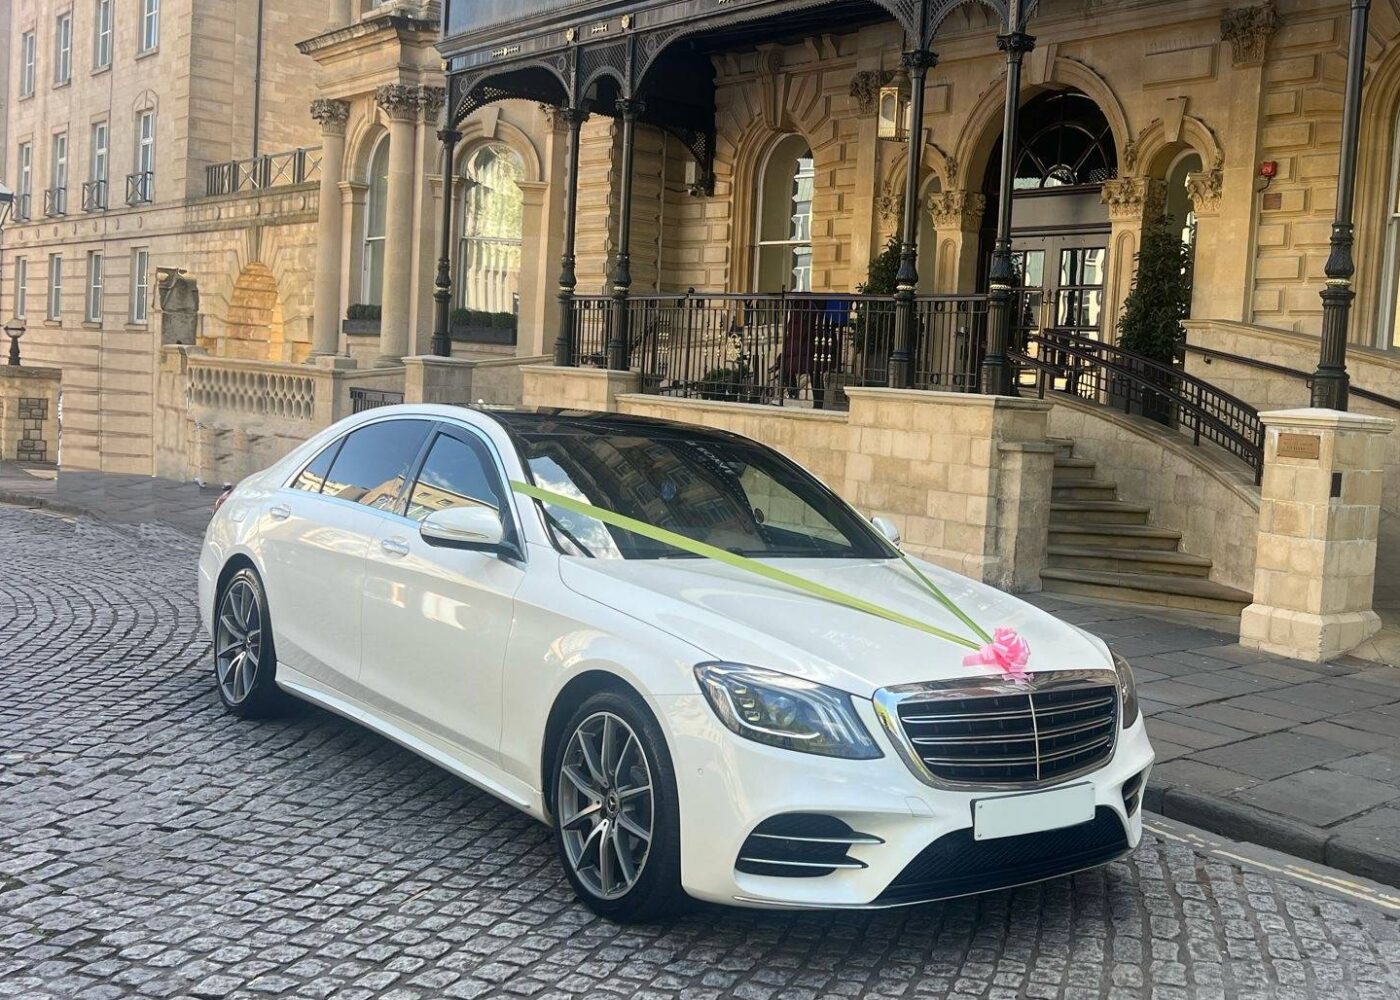 White wedding car - S-class Mercedes at a Bristol hotel